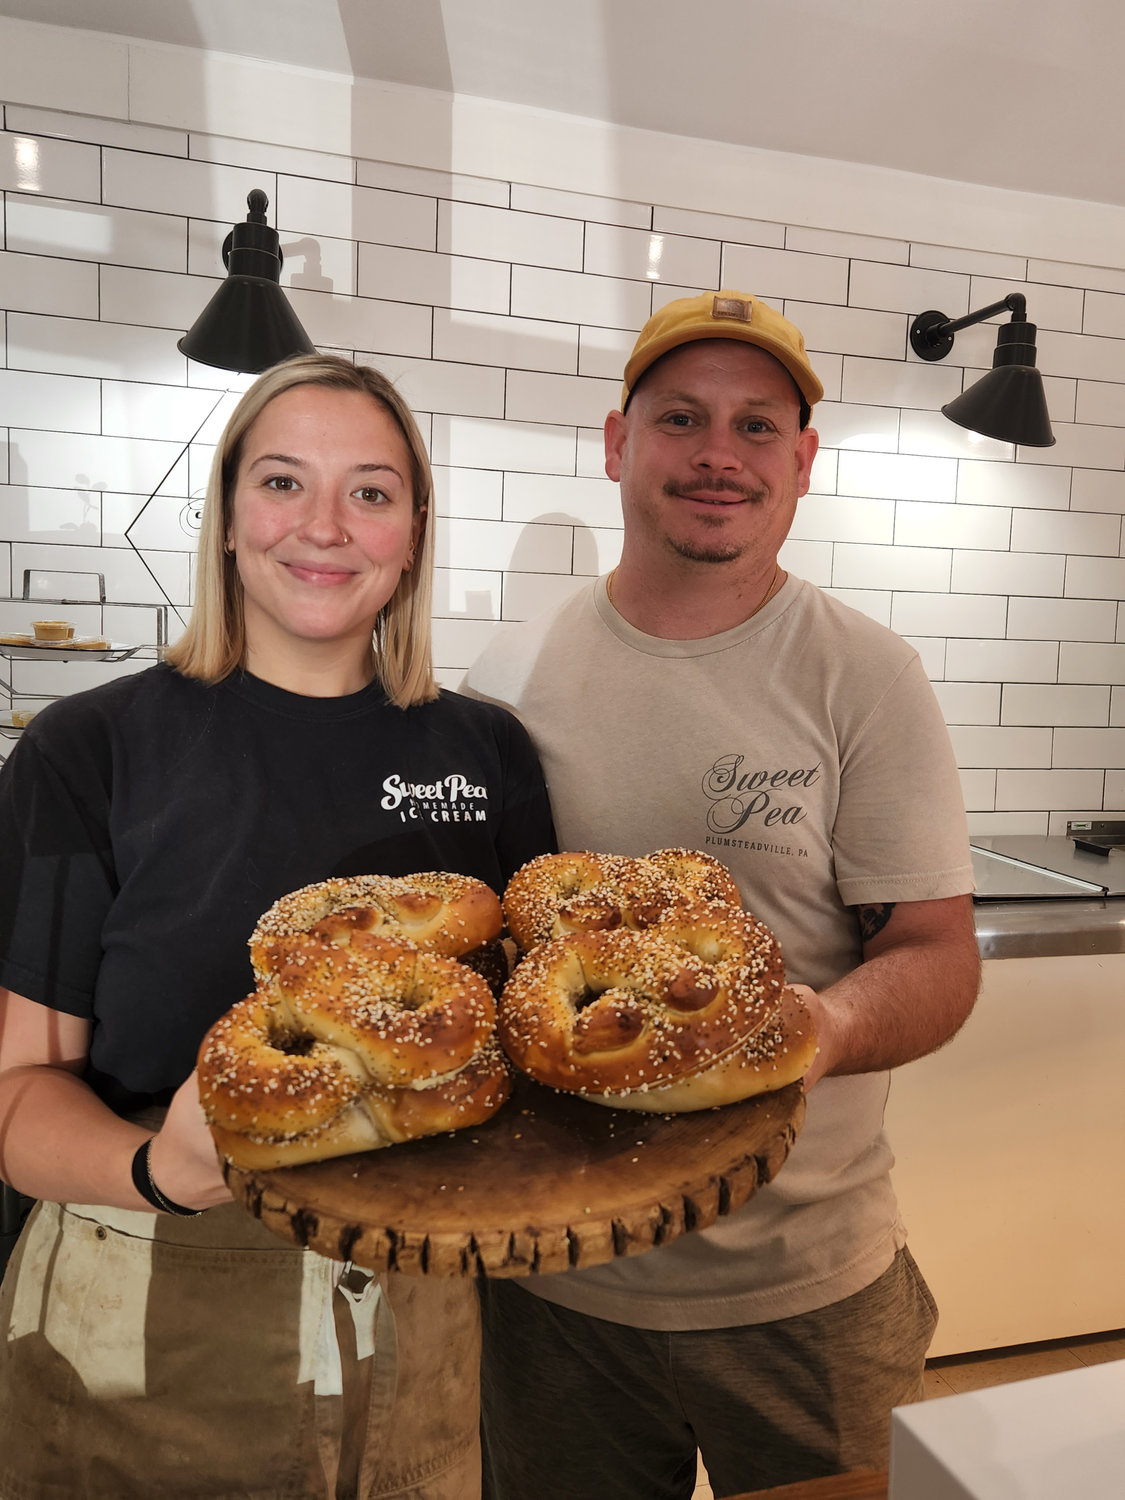 Olivia Marinelli and cousin and fellow employee Josh Green
show off a platter of Salt Box pretzels.